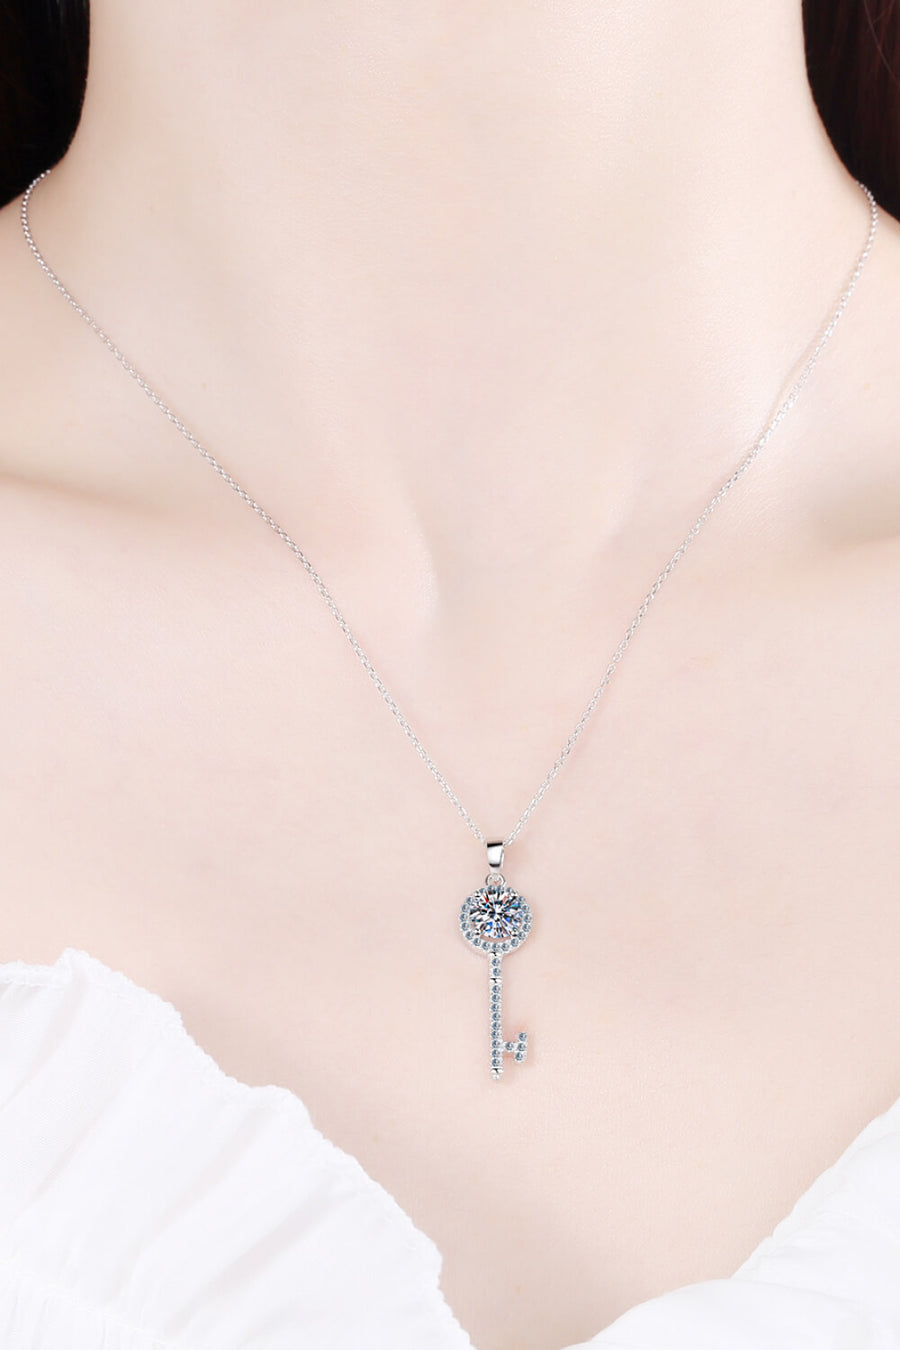 1# BEST Diamond Key Pendant Necklace Jewelry Gifts for Women | #1 Best Most Top Trendy Trending 1 Carat Diamond Key Pendant Necklace Gift for Women, Ladies | MASON New York